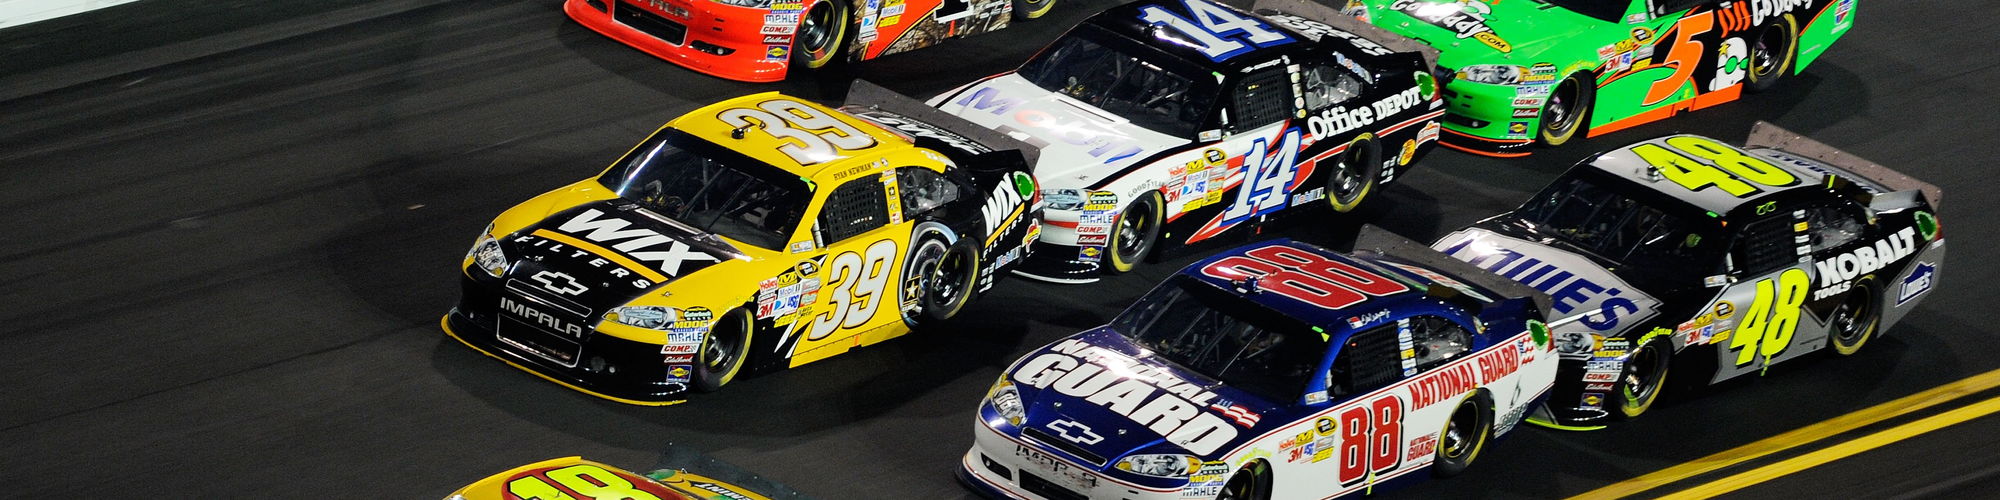 NASCAR cover image